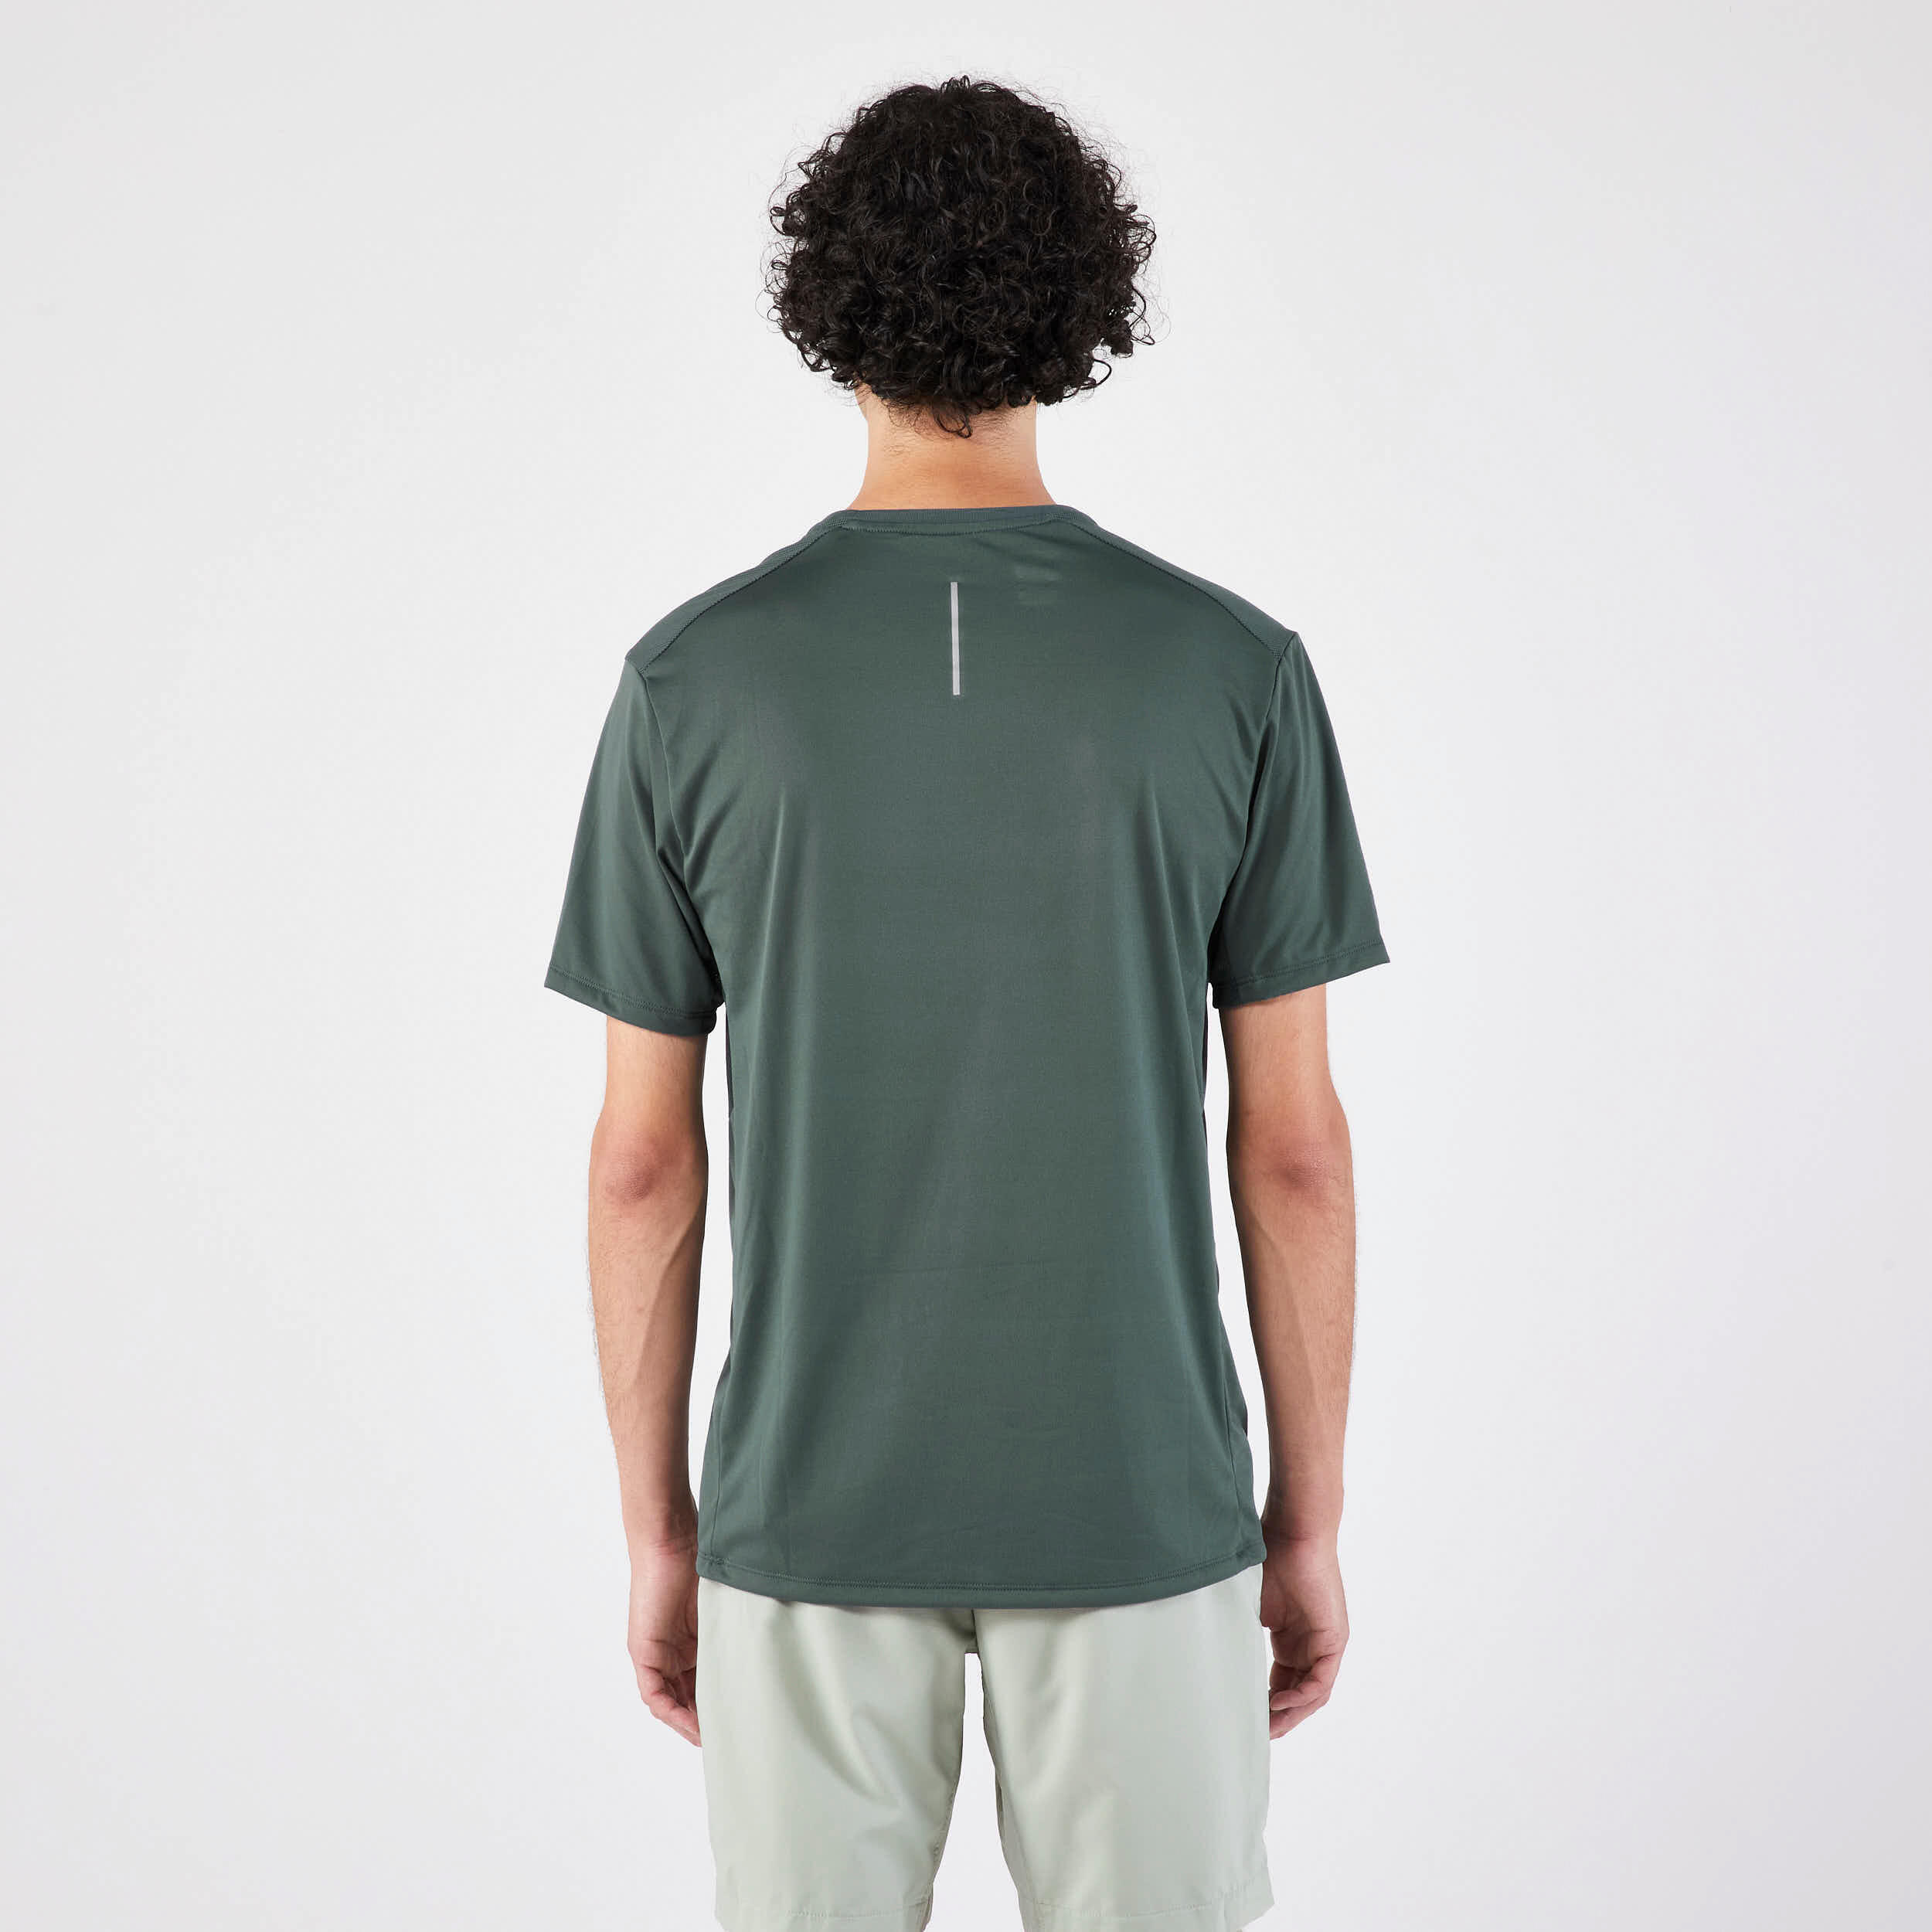 Dry+ Men's Running Breathable Tee-Shirt - Dark Green 3/5